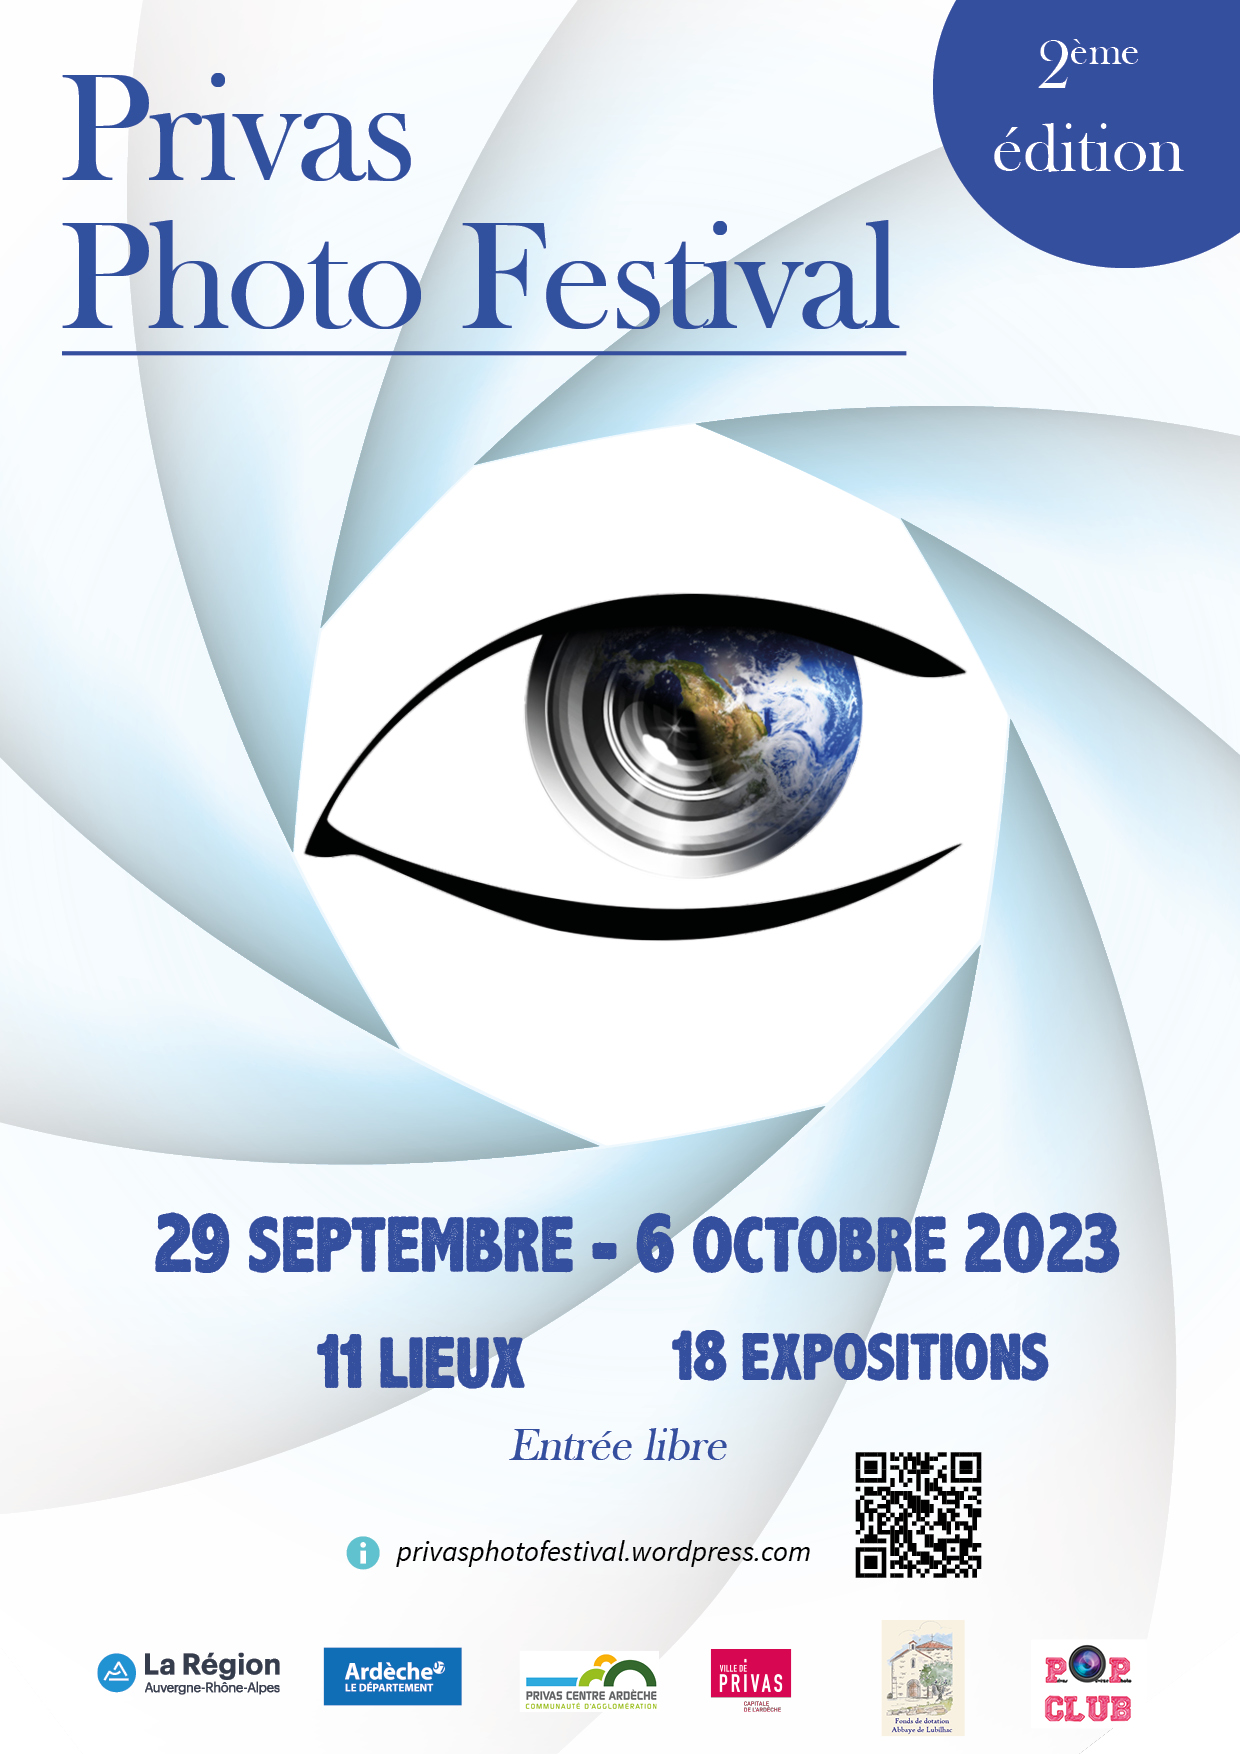 Alle leuke evenementen! : Privas Photo Festival